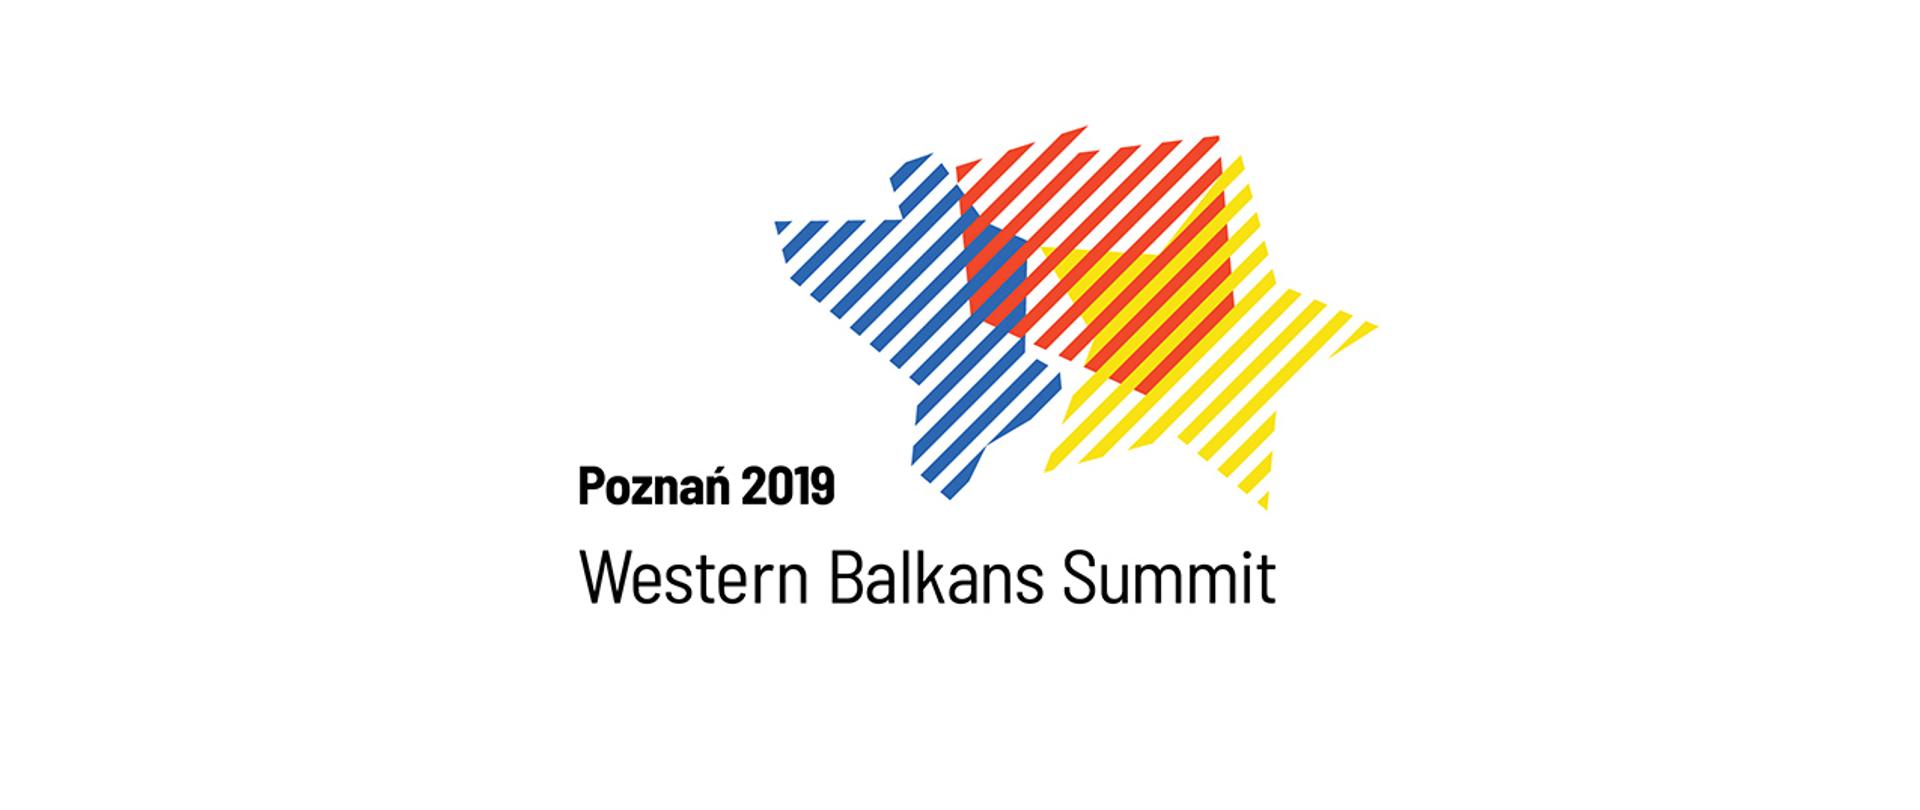 Western Balkans Summit logo